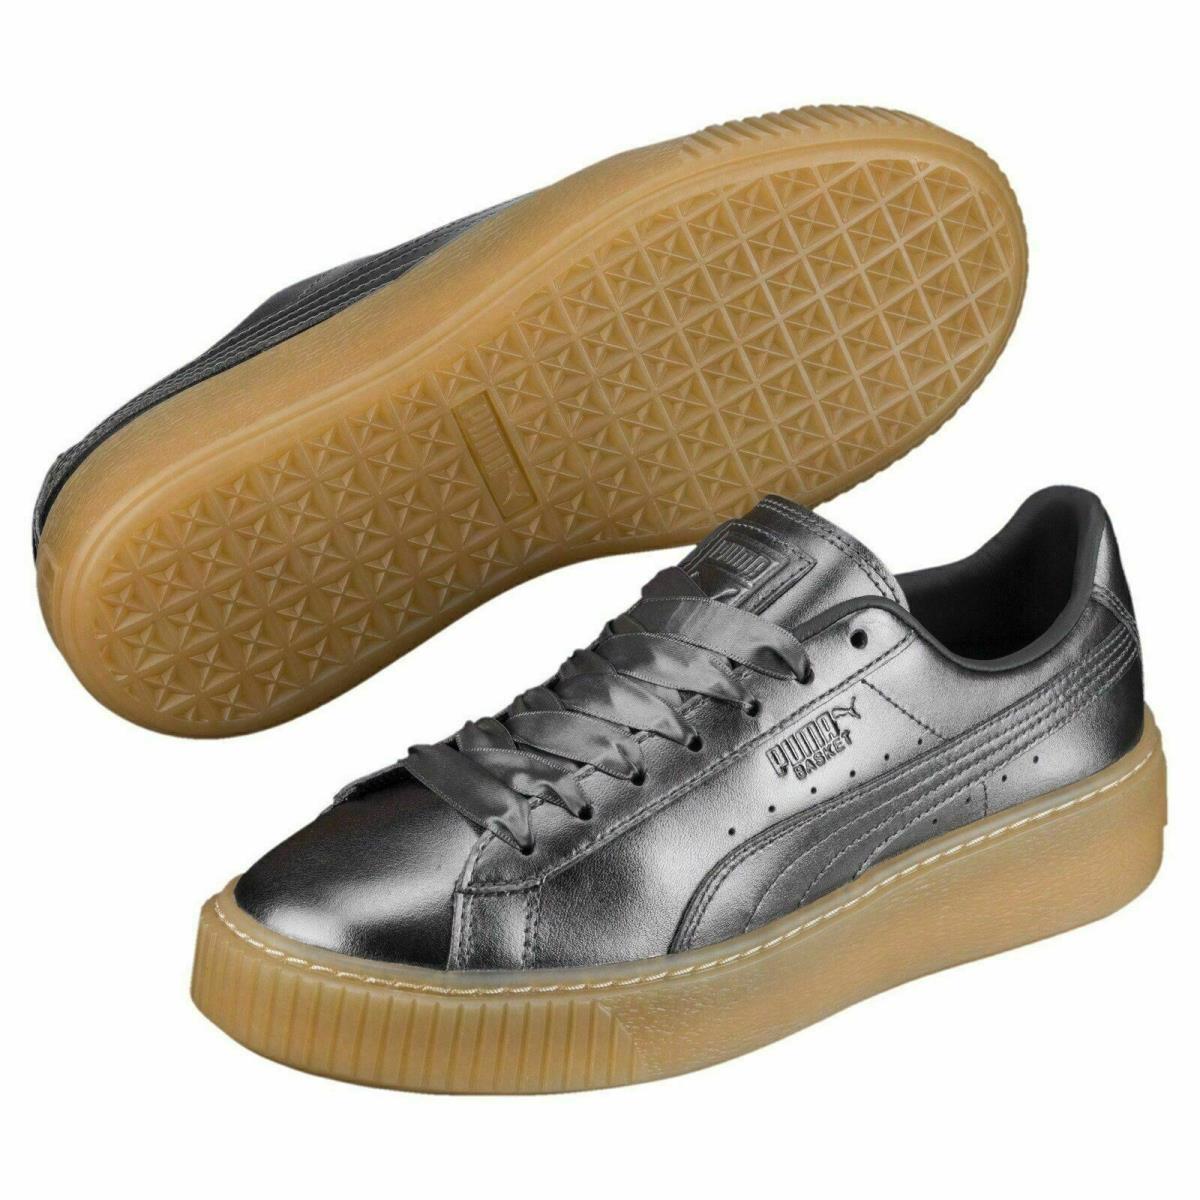 Puma Basket Platform Luxe Leather Shoes Gray Brown 366687-01 Womens Sz 5.5